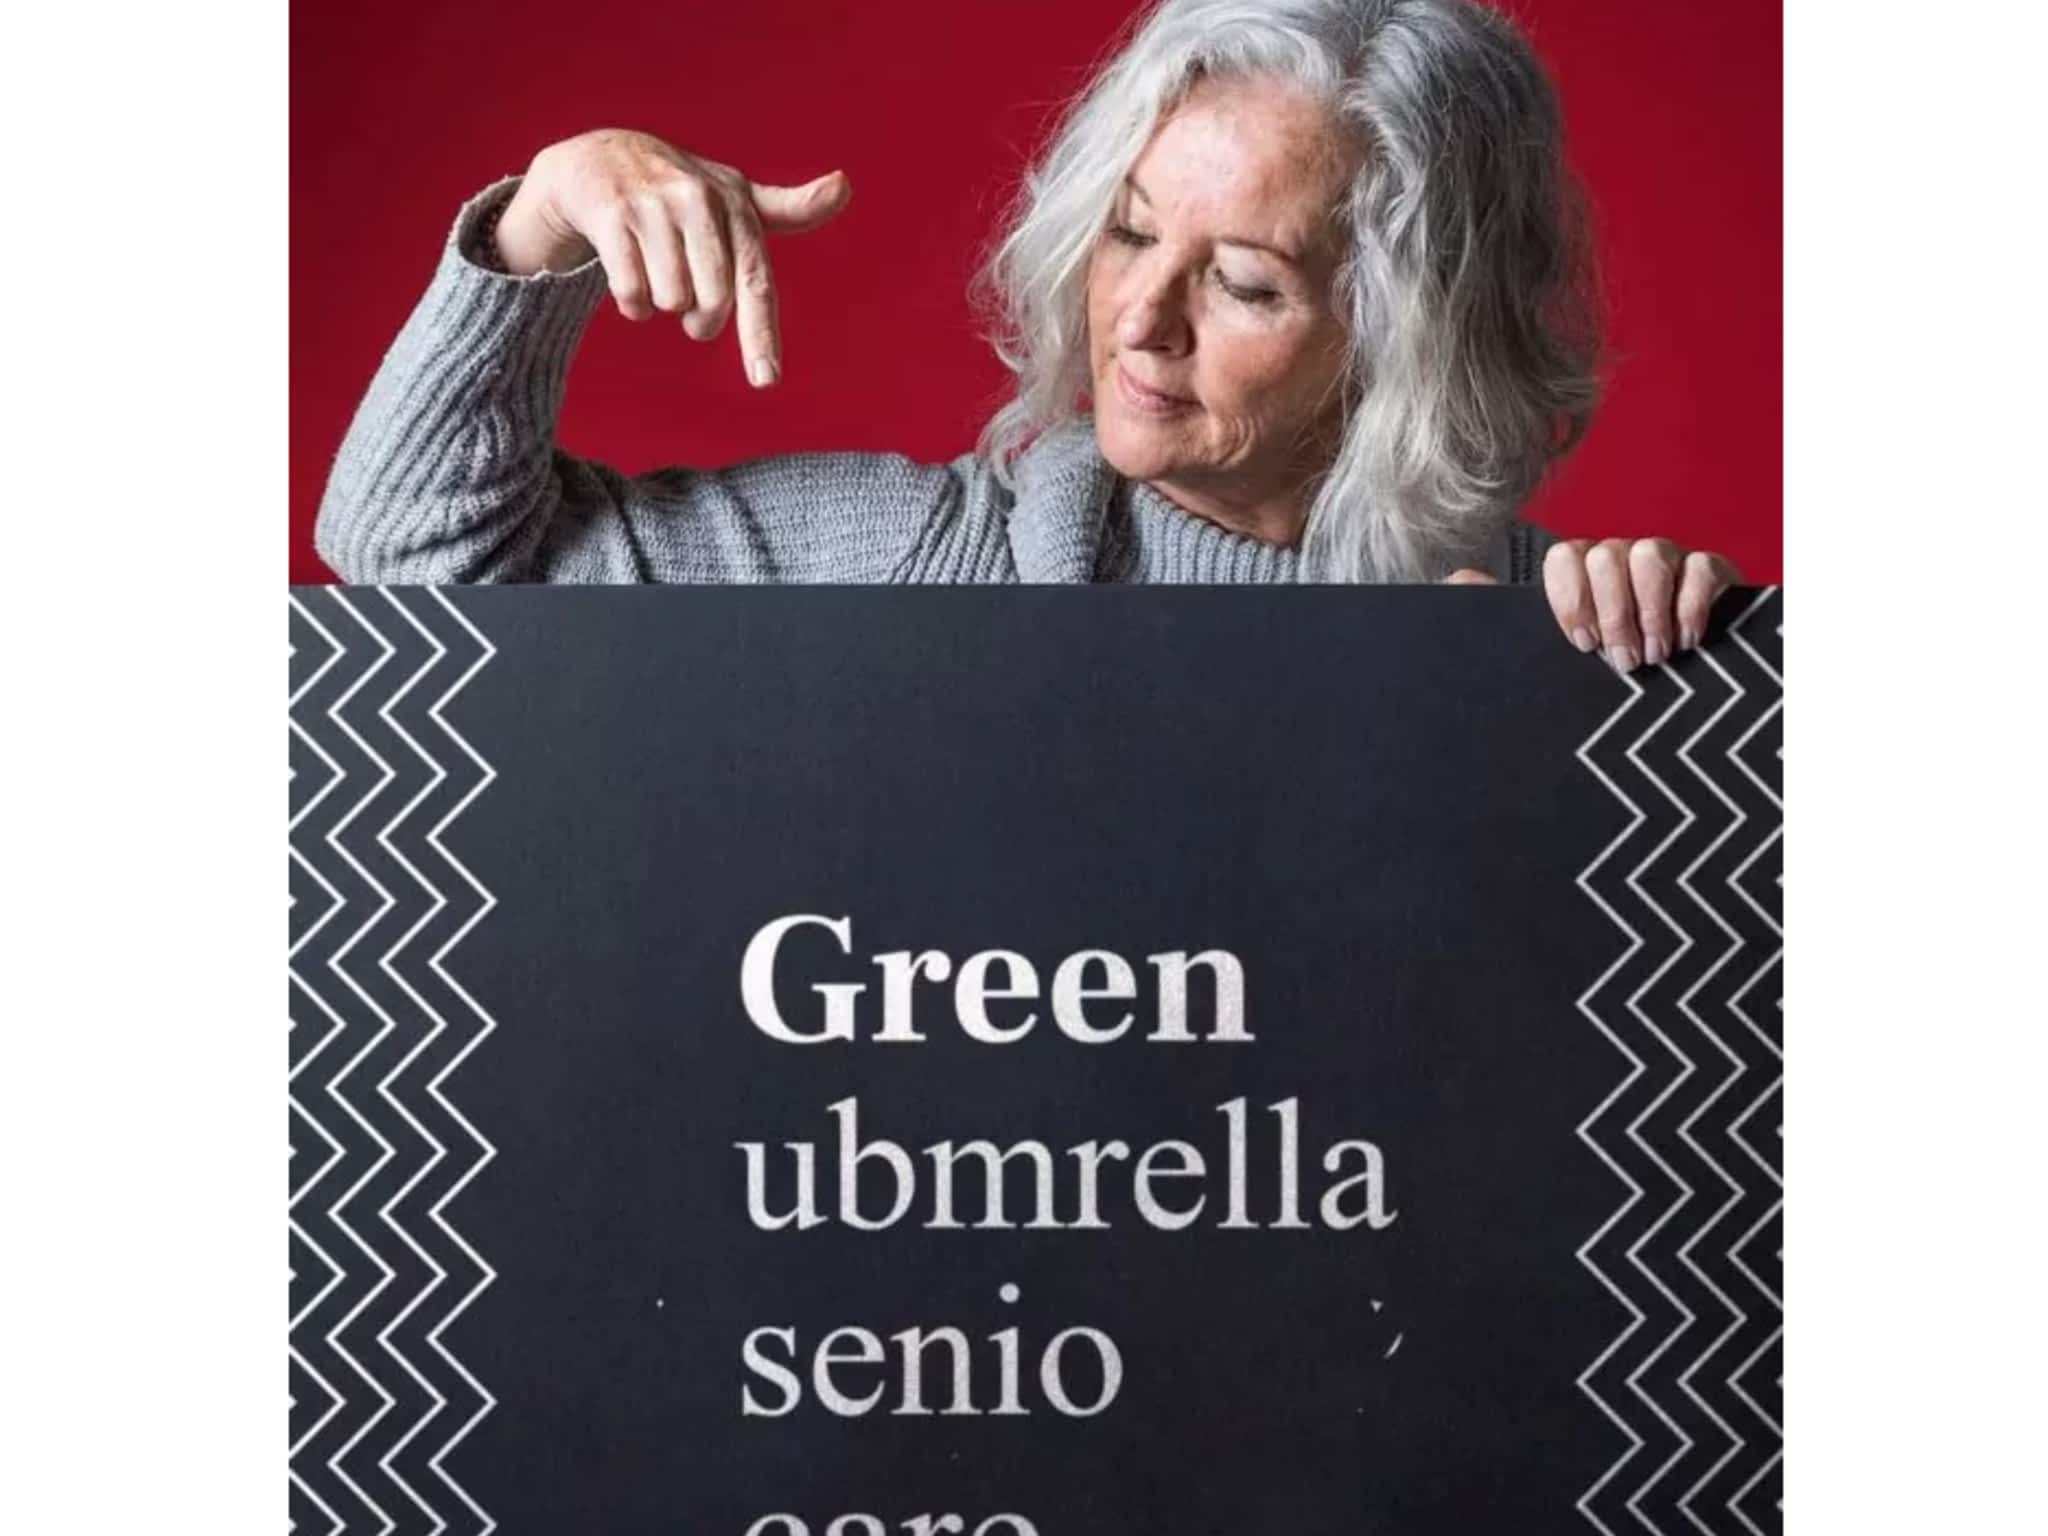 photo Green Umbrella Senior Care